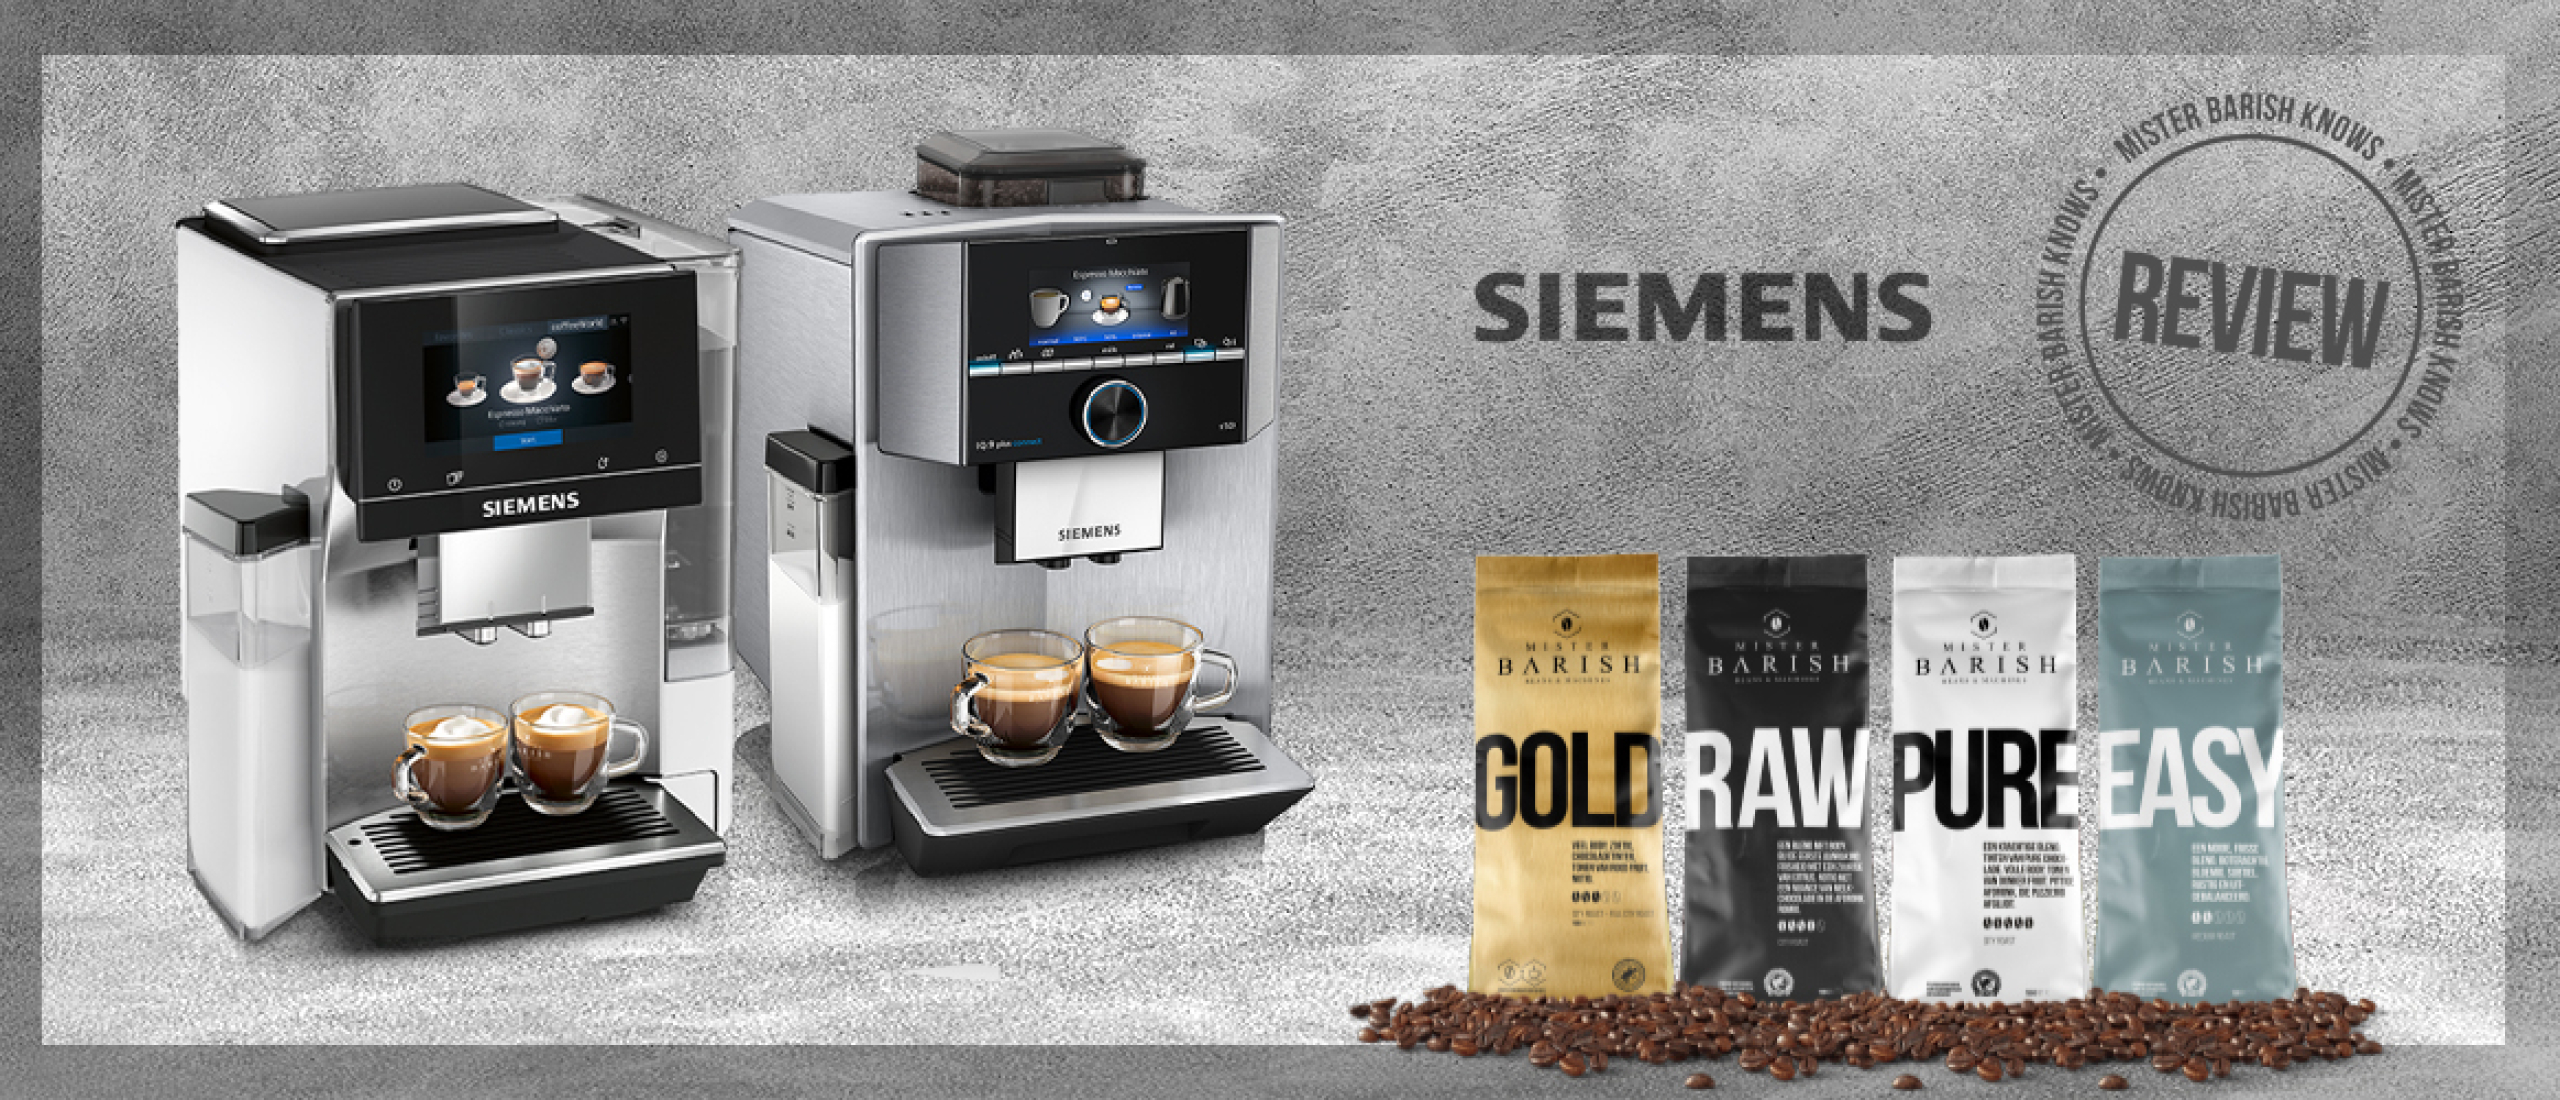 mate per ongeluk Editie Siemens koffiemachine kopen? Vijf reviews met tips en koopadvies